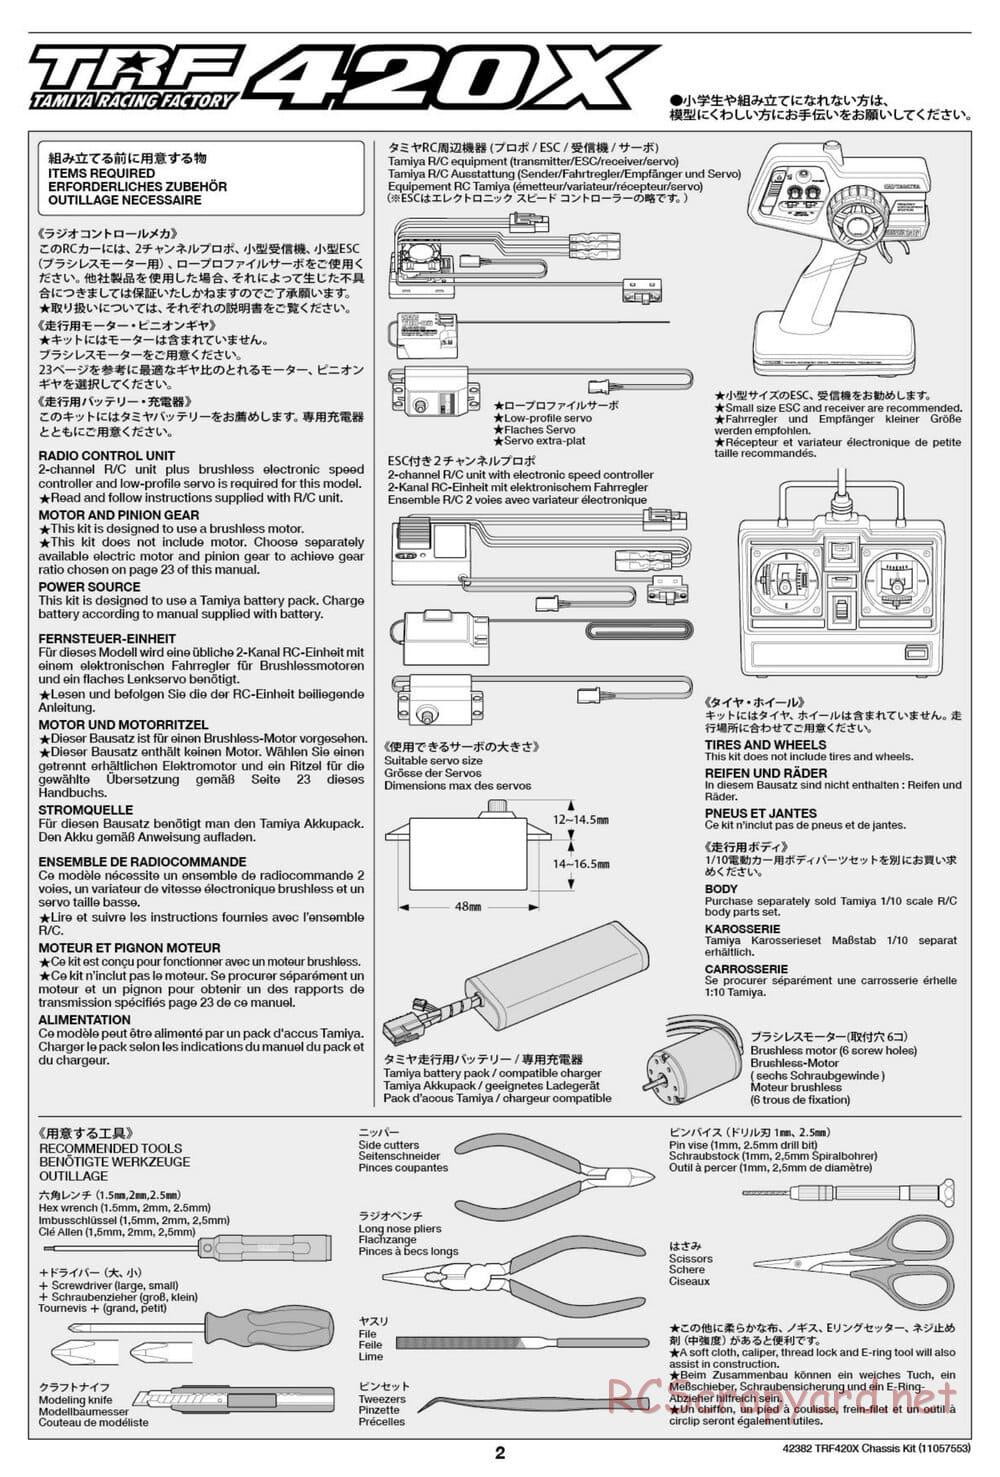 Tamiya - TRF420X Chassis - Manual - Page 2